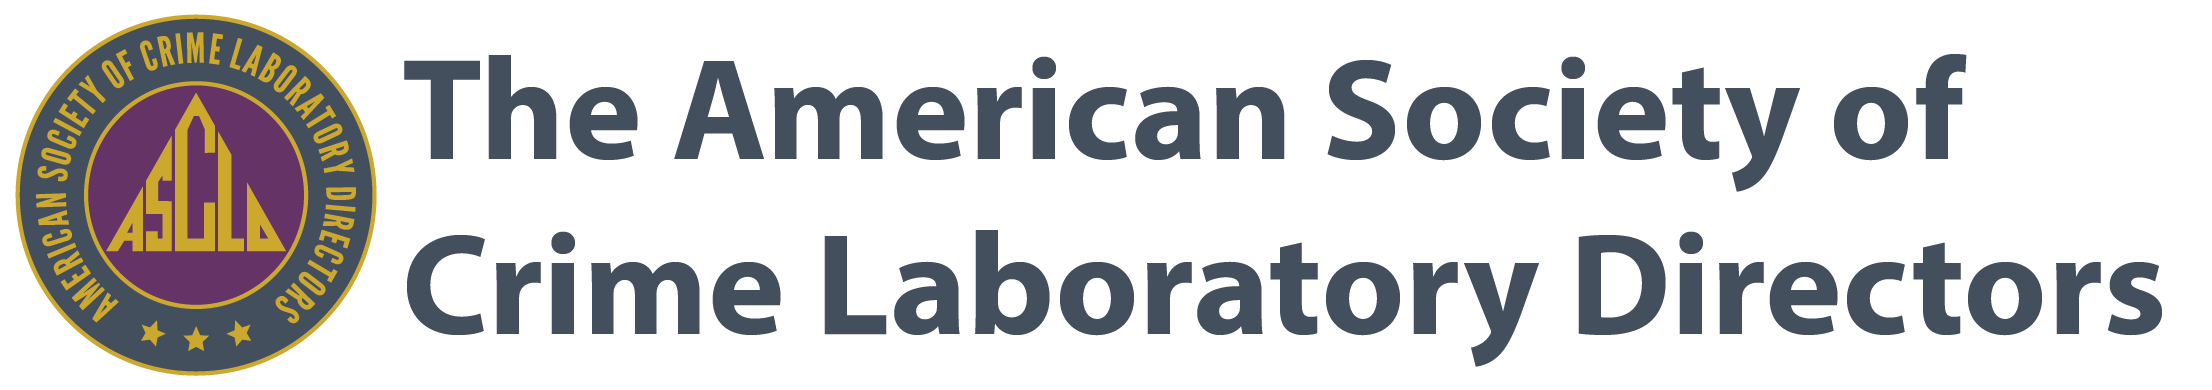 The American Society of Crime Laboratory Directors Logo